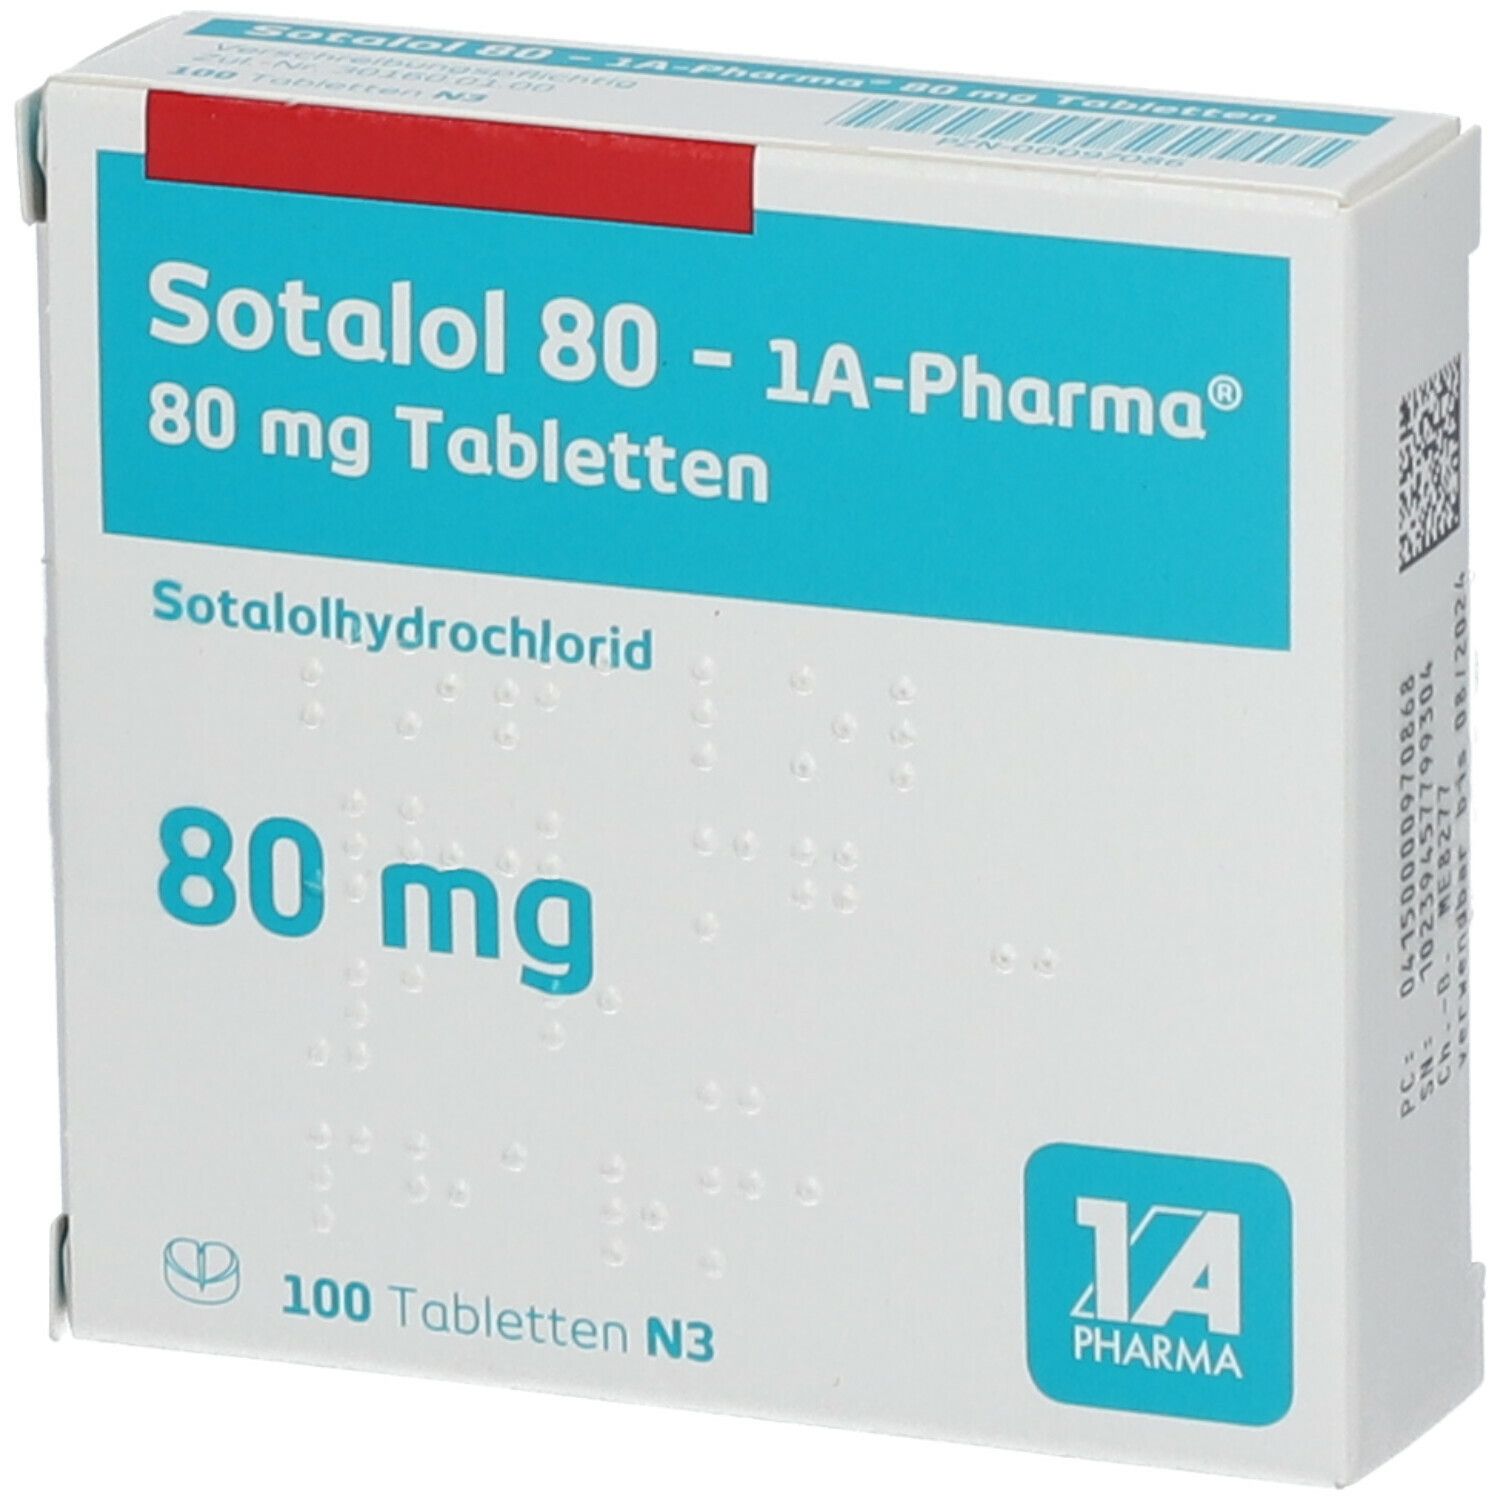 Sotalol 80 1A Pharma®